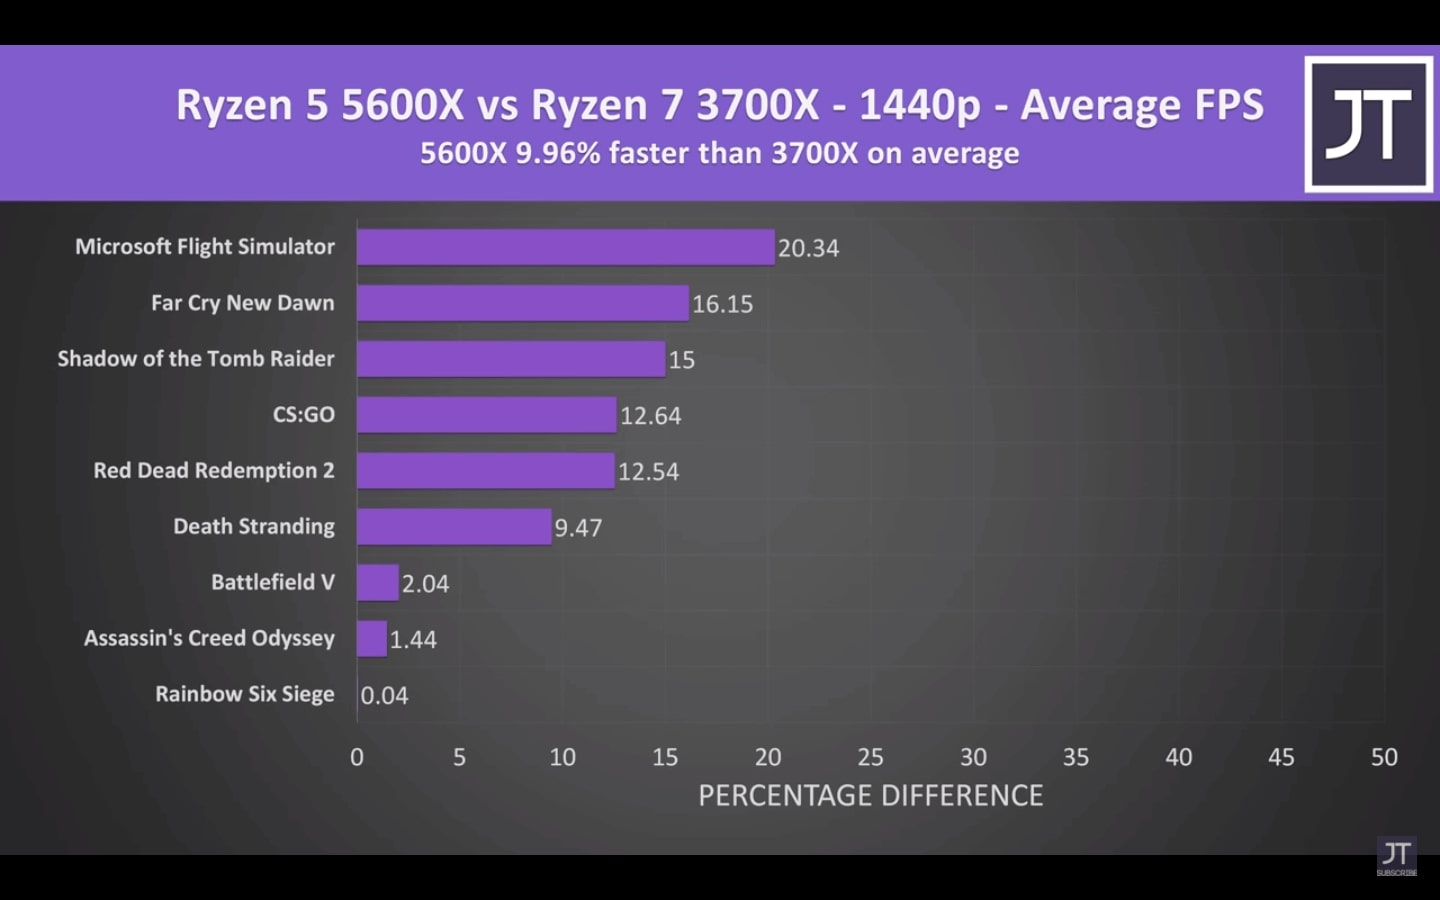  Ryzen 7 3700x vs Ryzen 5 5600x FPS Average